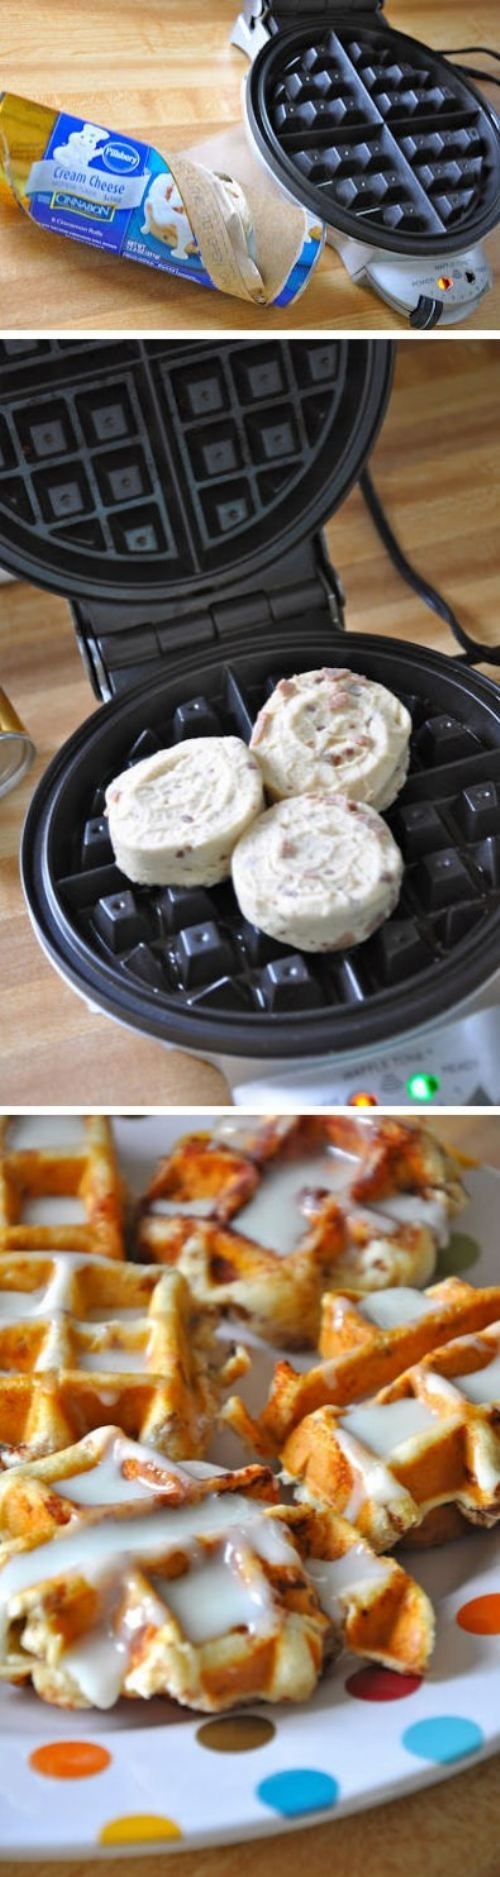 Food - Cinnamon Rolls with Cream Cheese Icing